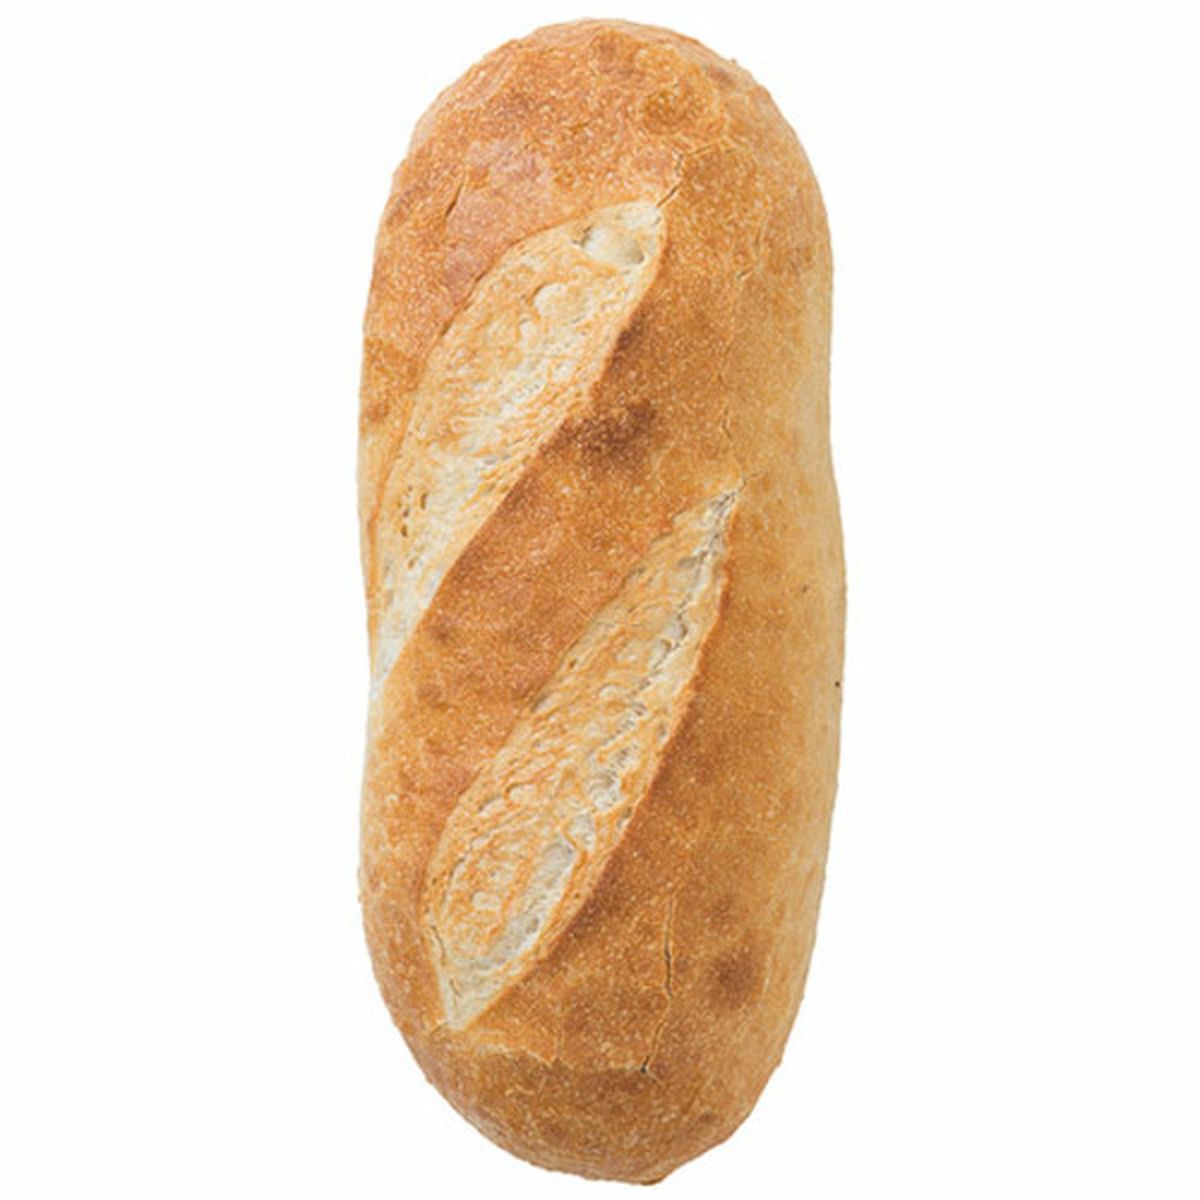 Calories in Wegmans Organic Sourdough Loaf